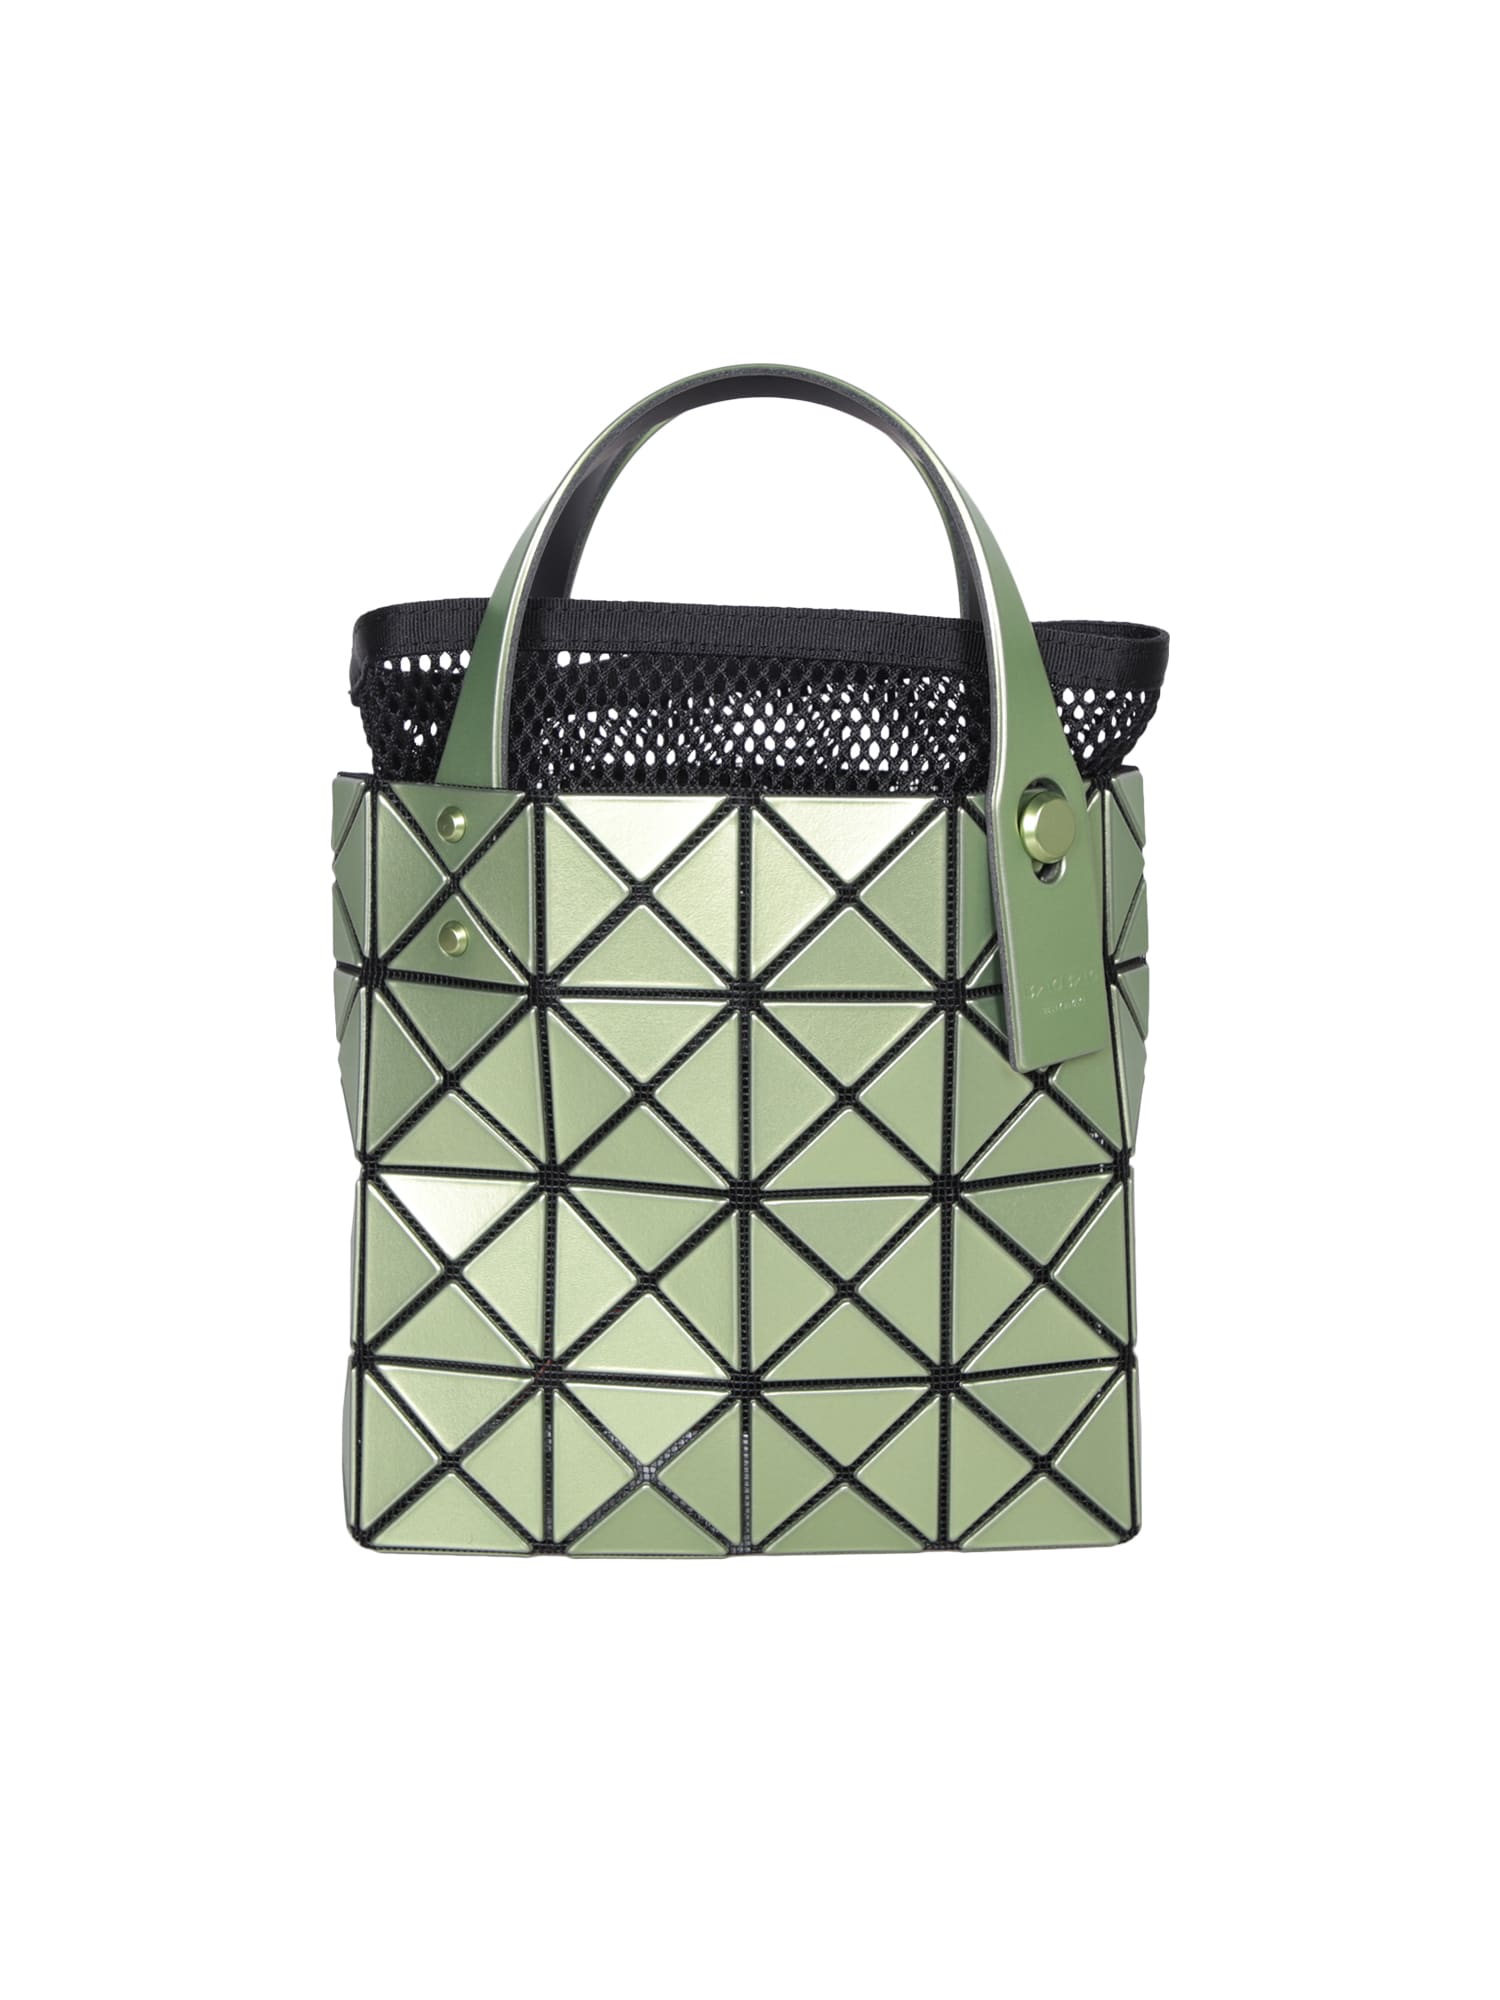 Issey Miyake Lucent Boxy Green Bag